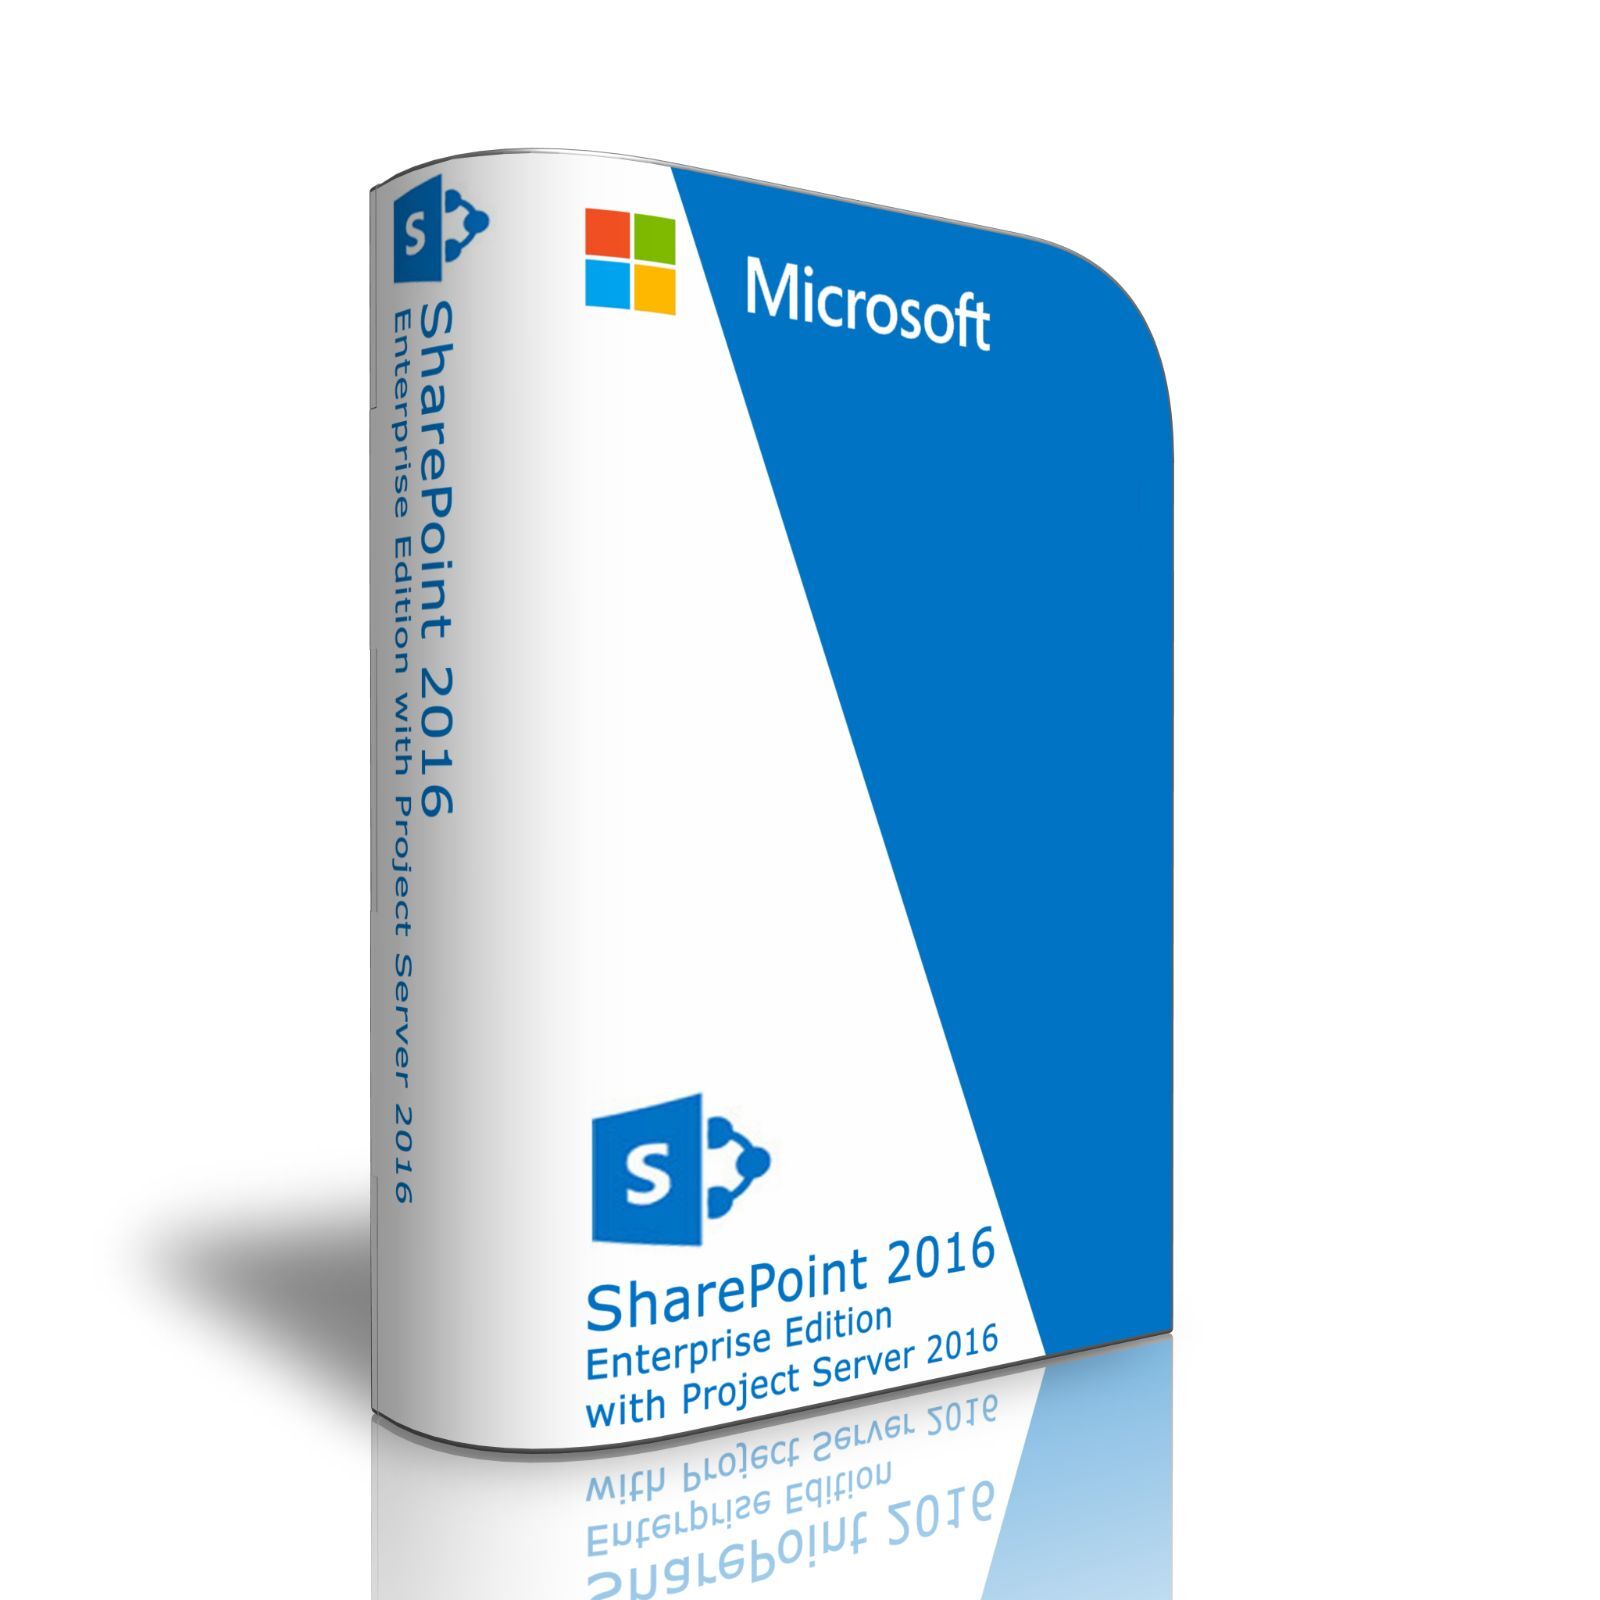 SharePoint Server 2016 Enterprise Edition 64 Bit. New unopened, shrink wrapped